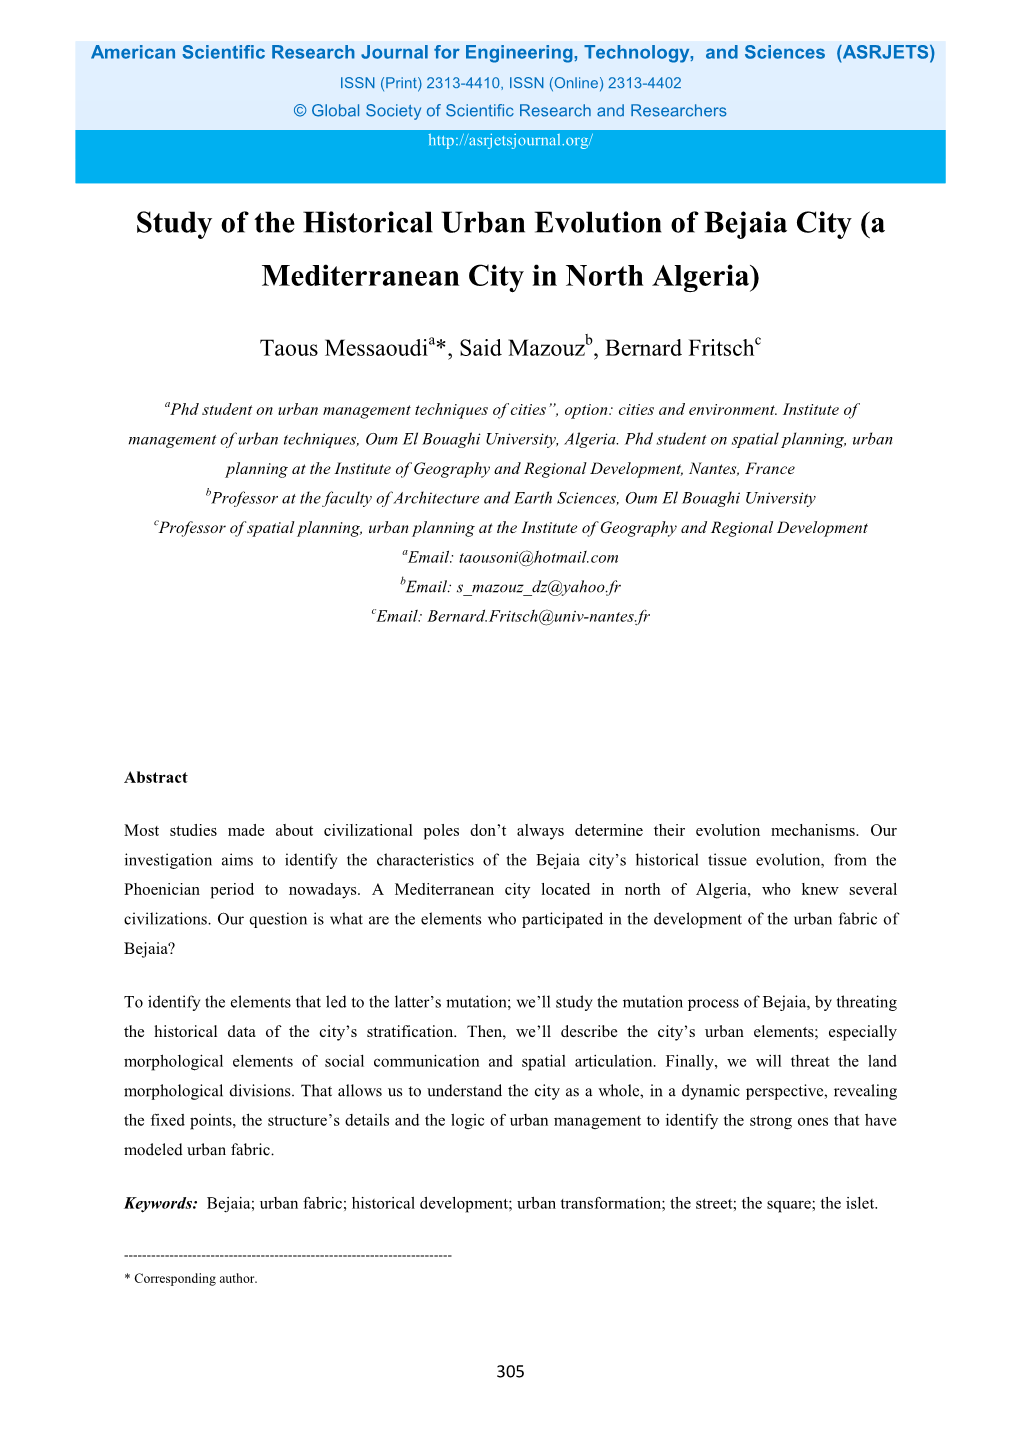 Study of the Historical Urban Evolution of Bejaia City (A Mediterranean City in North Algeria)